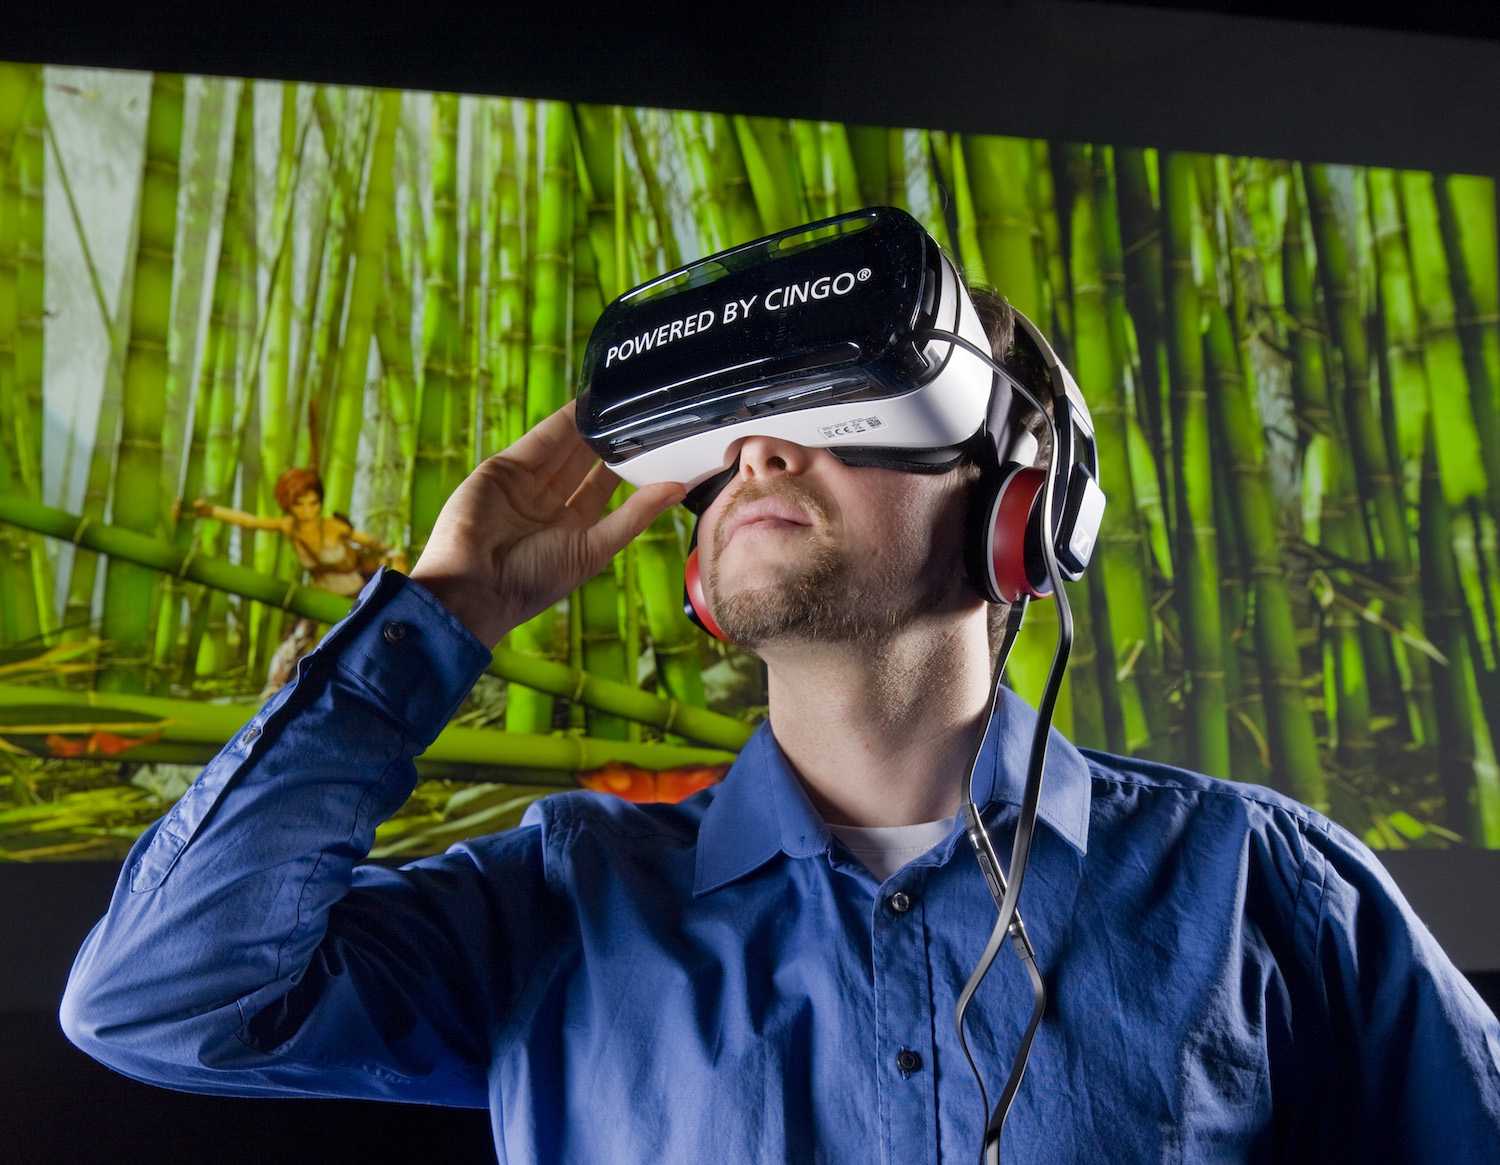 Vr драйвера. VR виртуальная реальность. Виртуальная реальность без погружения. Человек в виртуальной реальности. Очки виртуальной реальности на человеке.